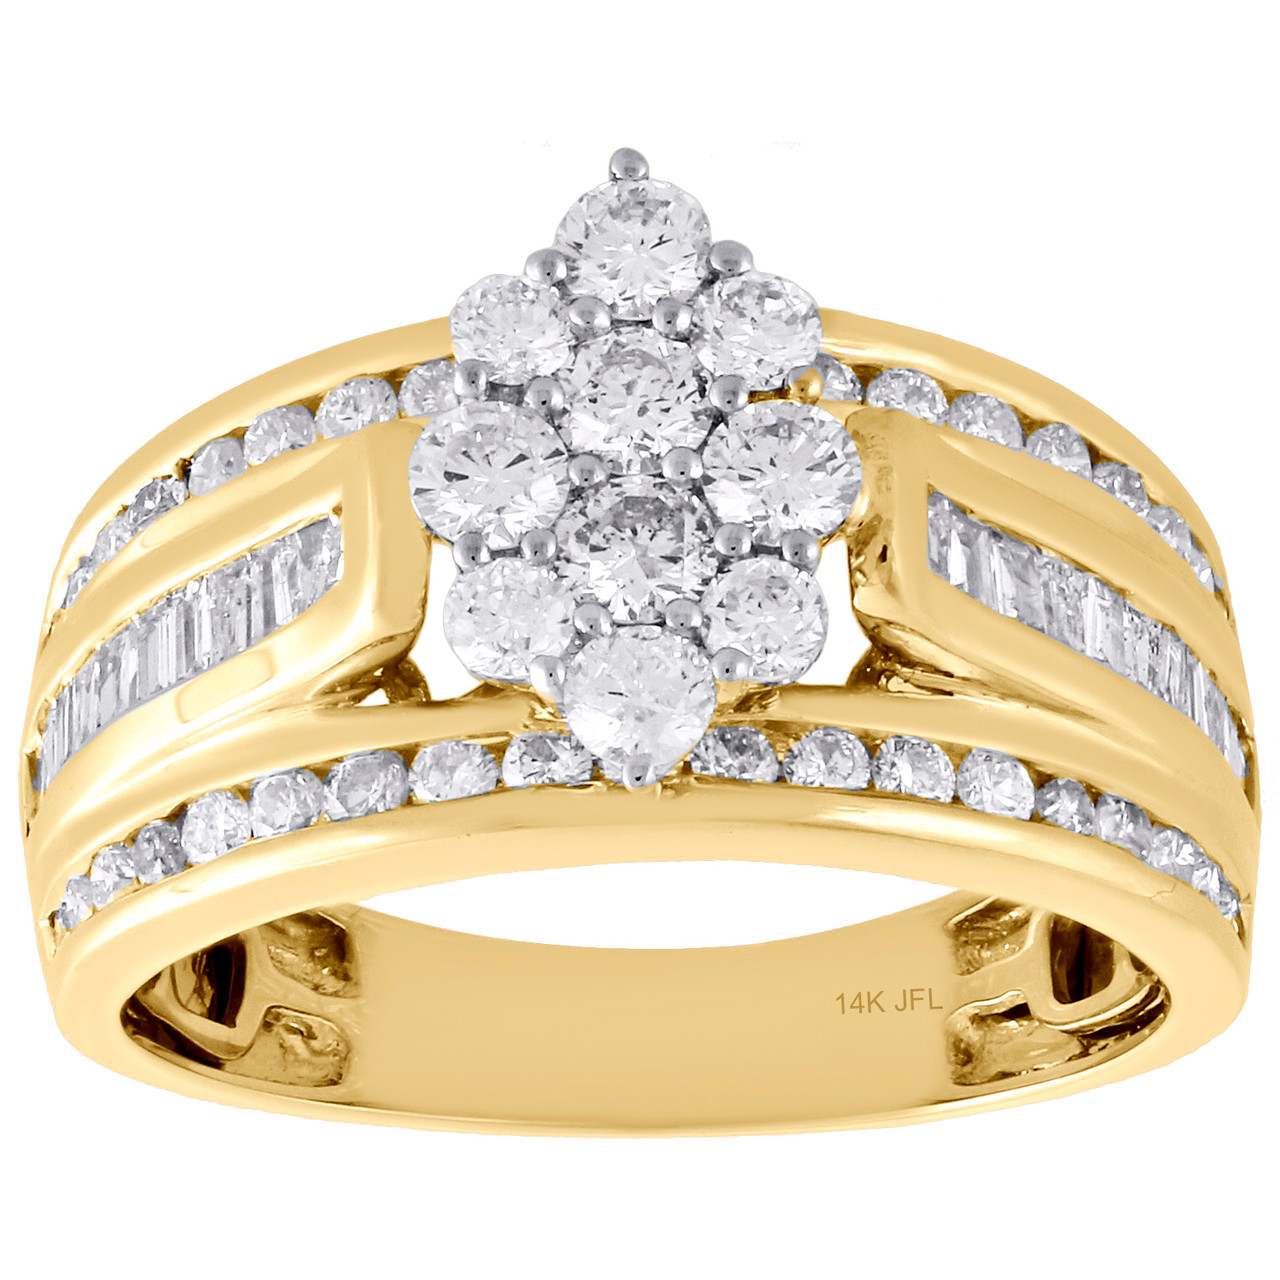 14k Solid White Gold 1.5 CT Diamond Engagement Wedding Ring Round Cut 